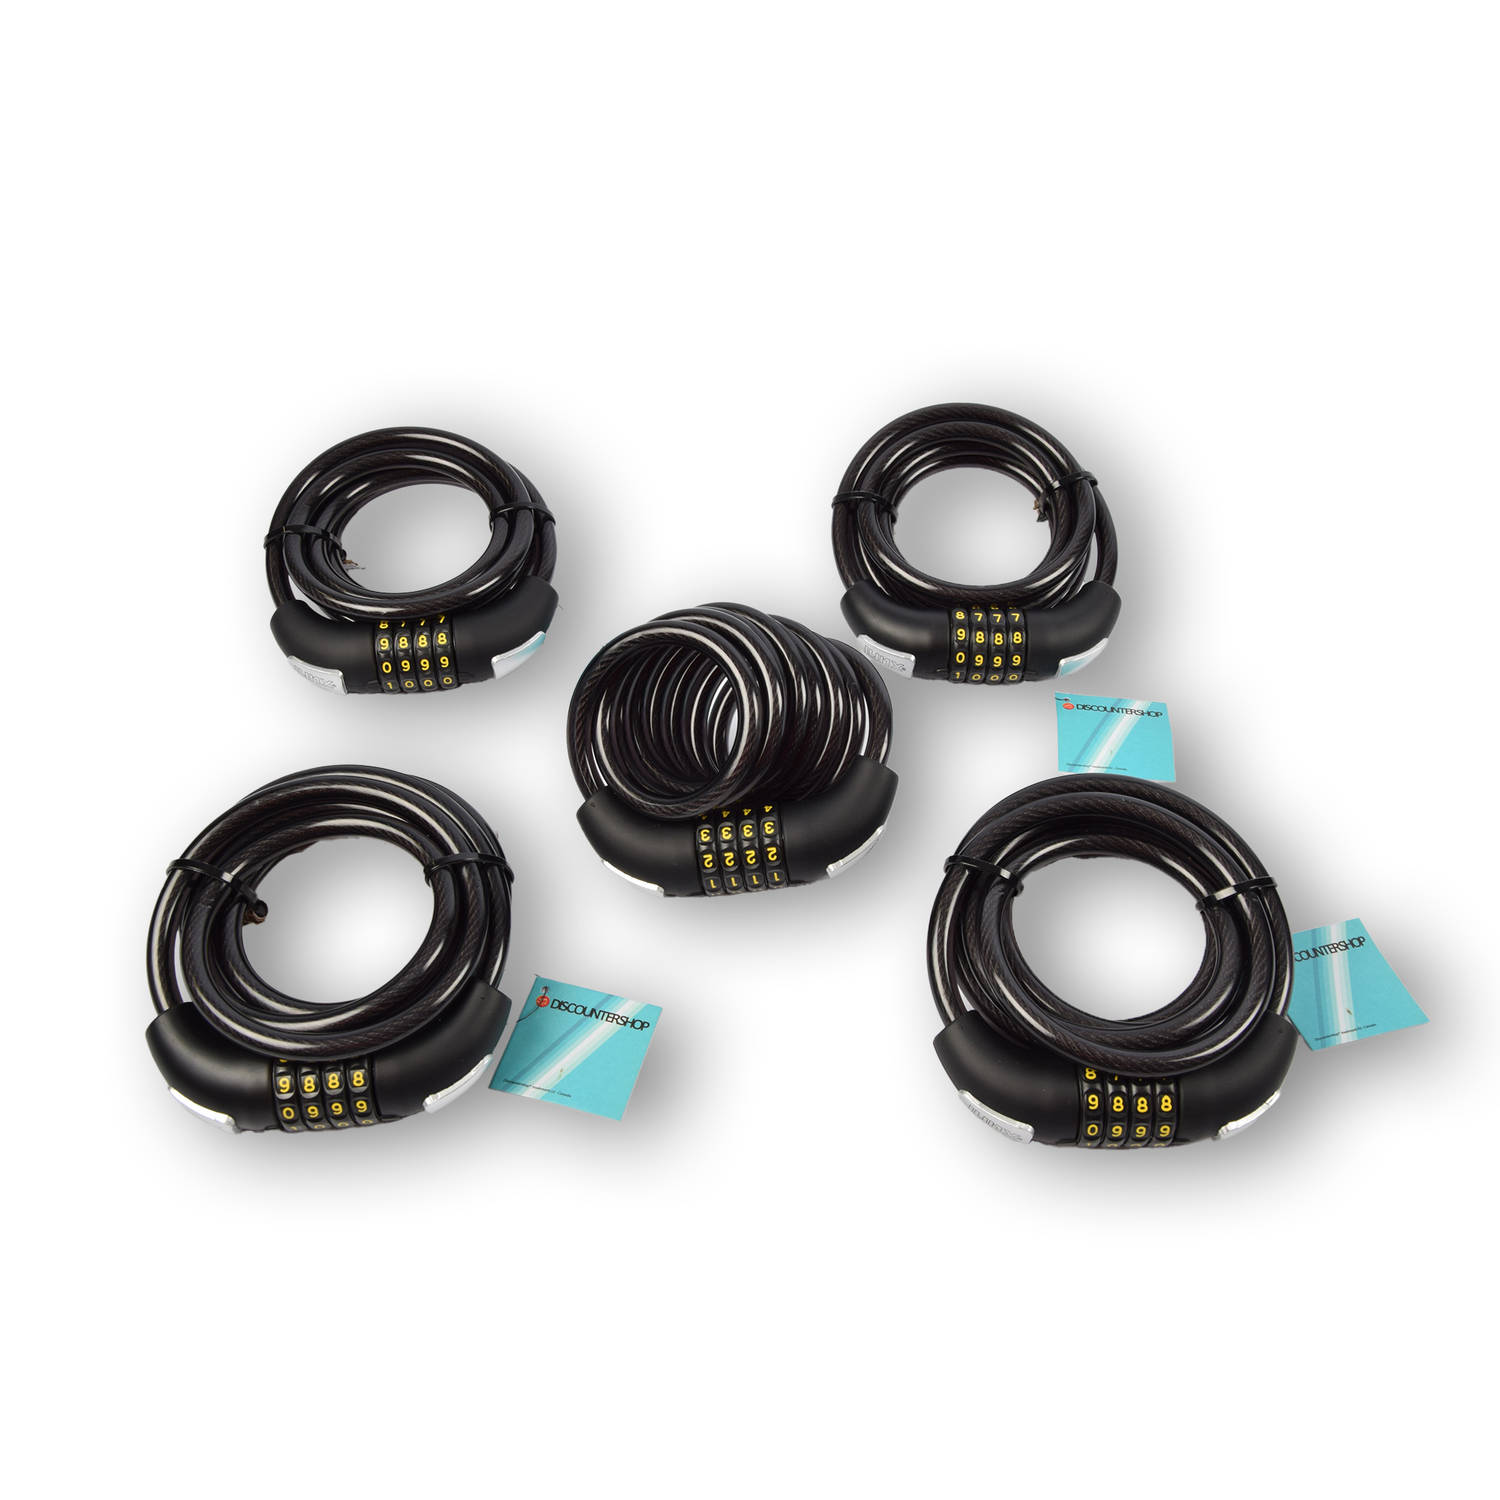 5x Topkwaliteit Zwarte Fietssloten Set met Cijfer- en Kabelslot - Anti-Diefstal, Lichtgewicht (425g), 180cm x 10mm